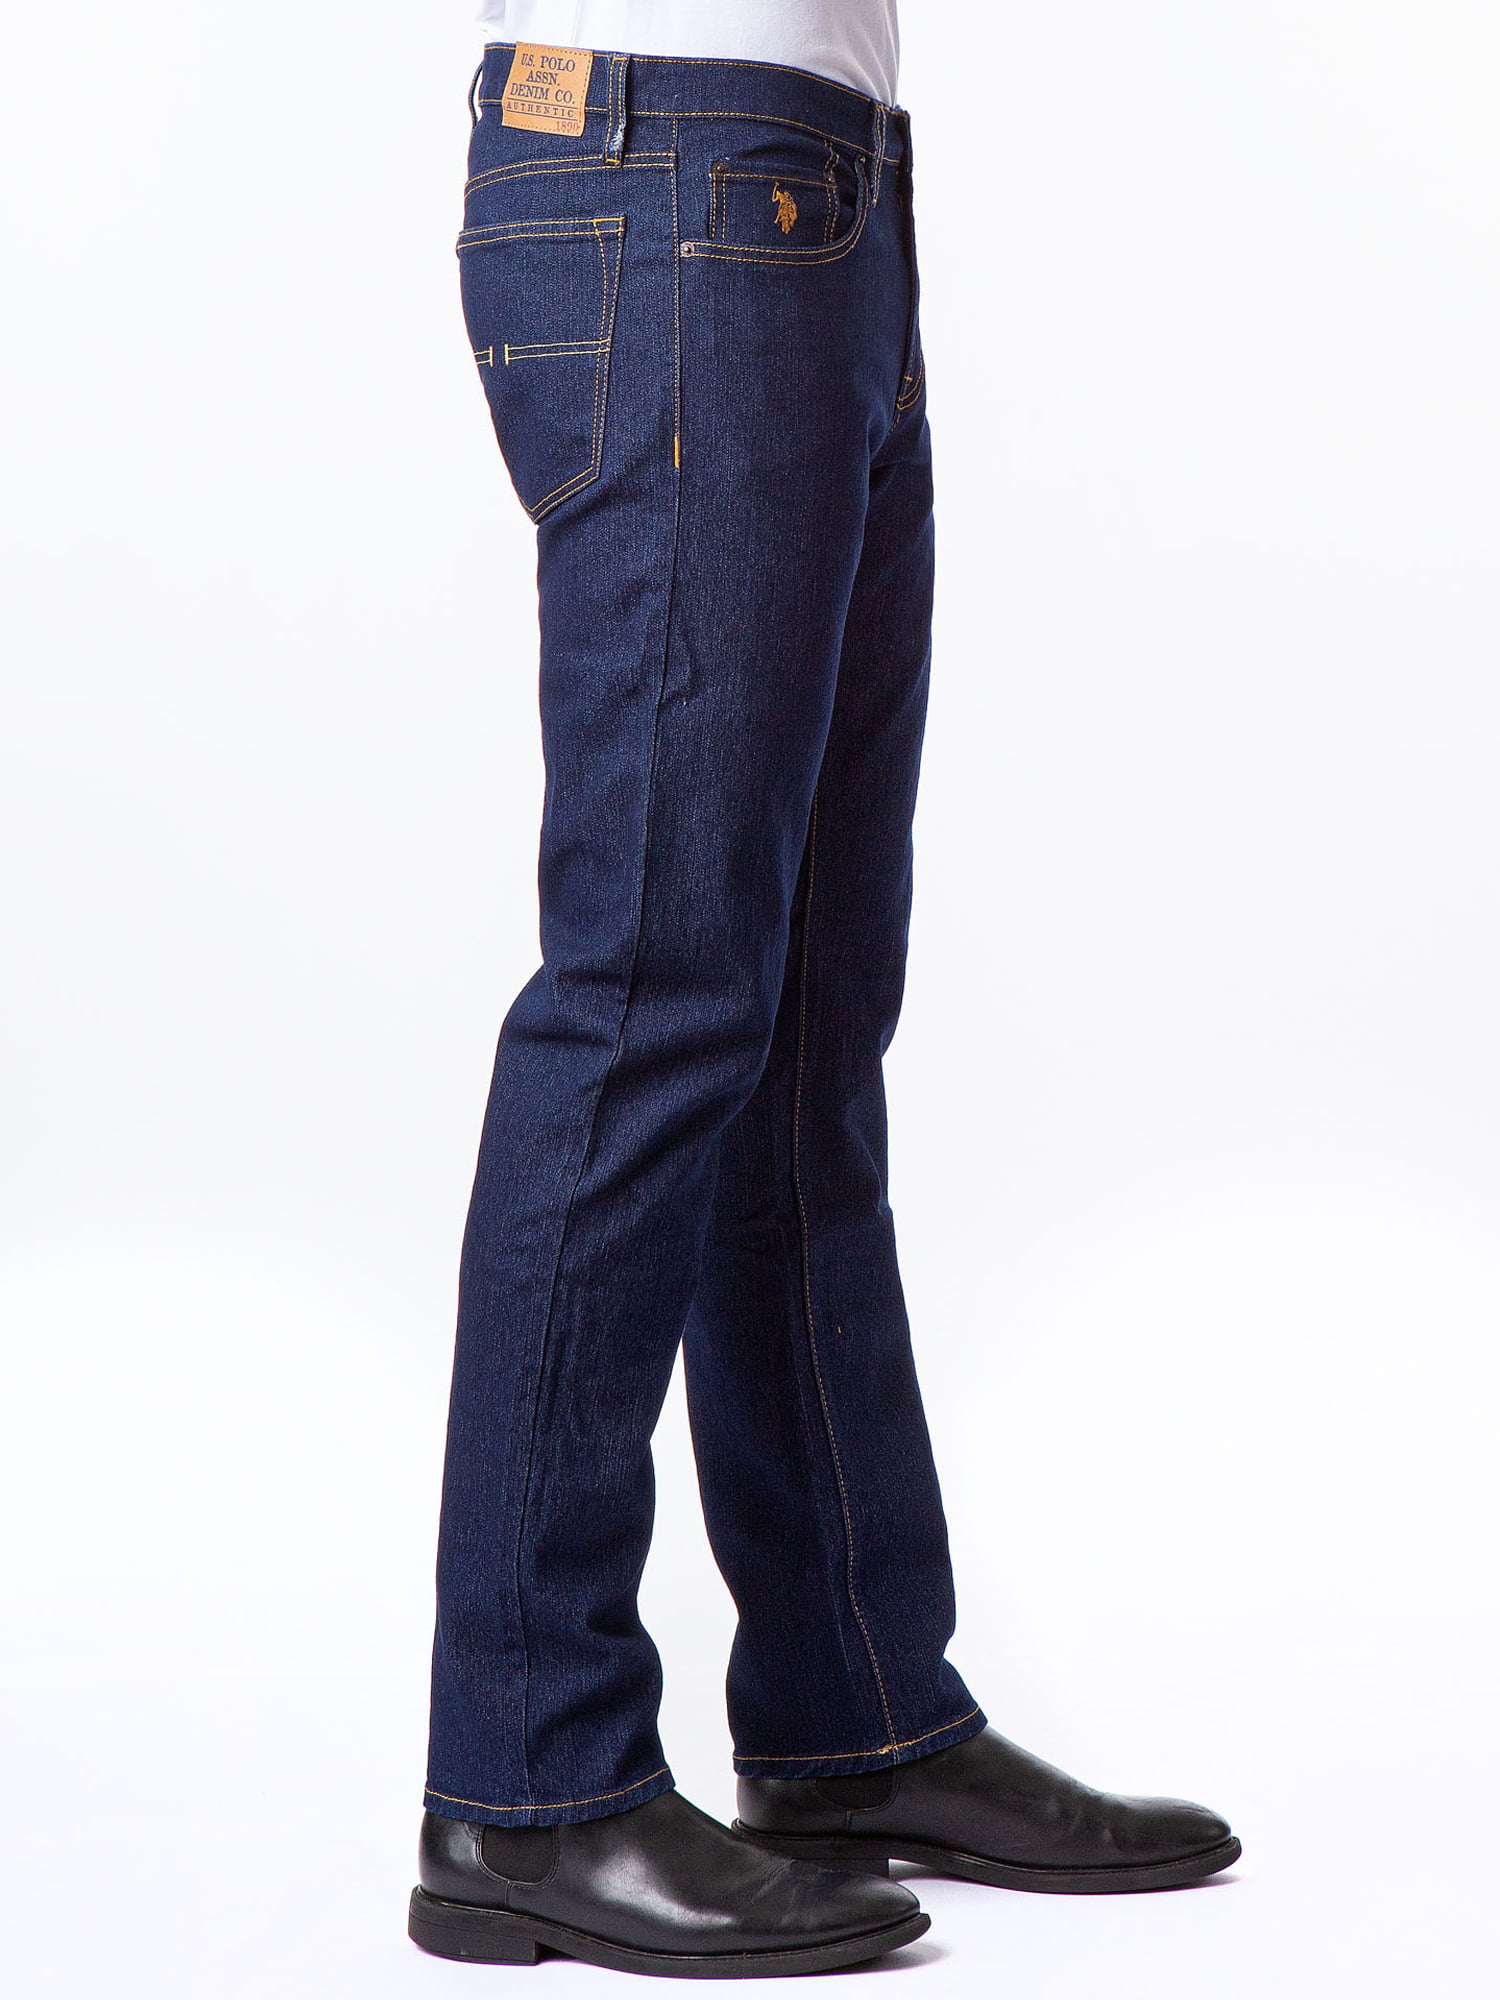 U.S. Polo Assn. Men's Stretch Slim Straight Jean